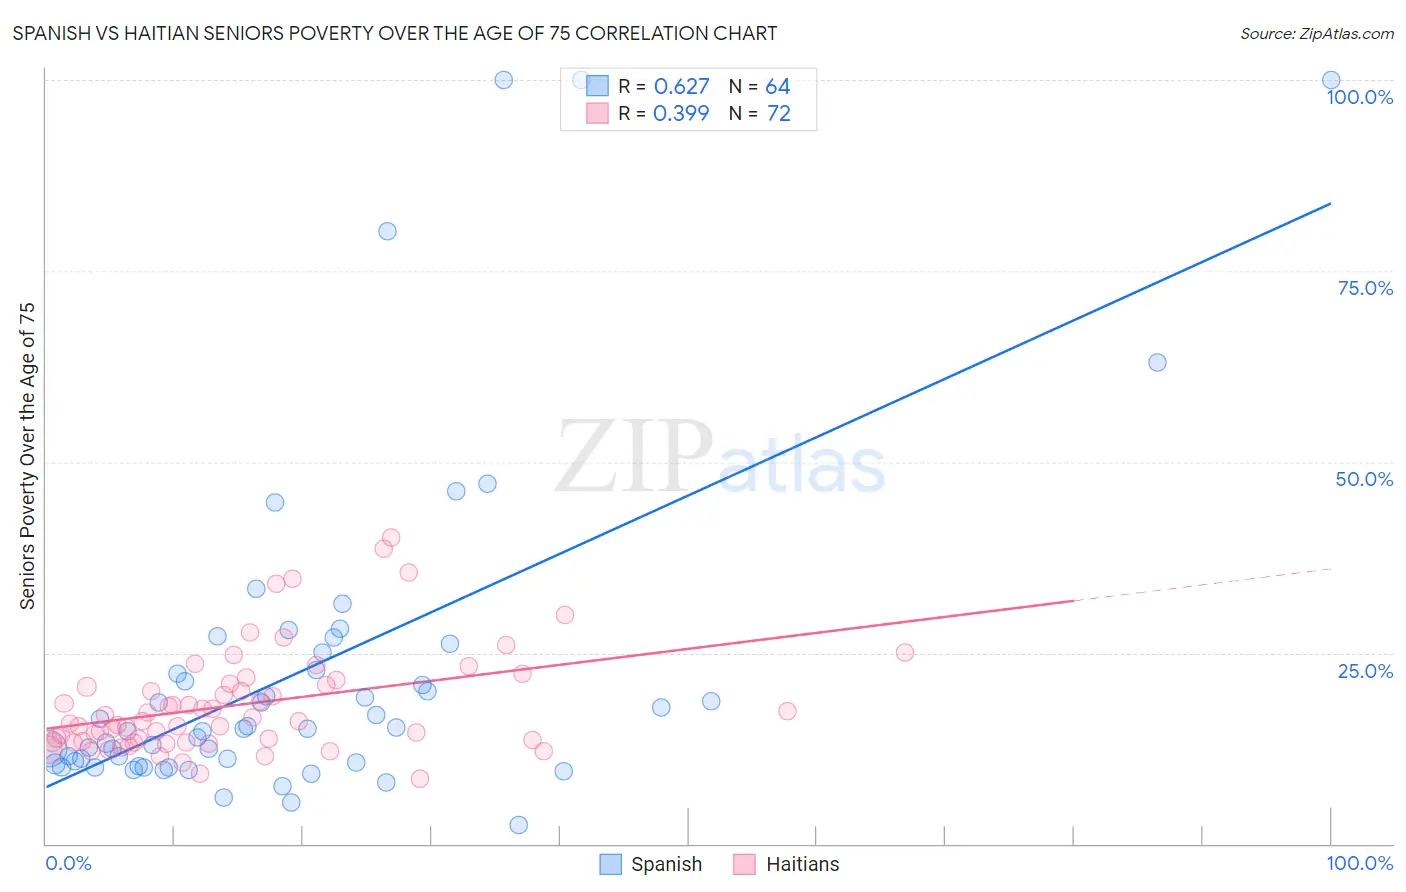 Spanish vs Haitian Seniors Poverty Over the Age of 75